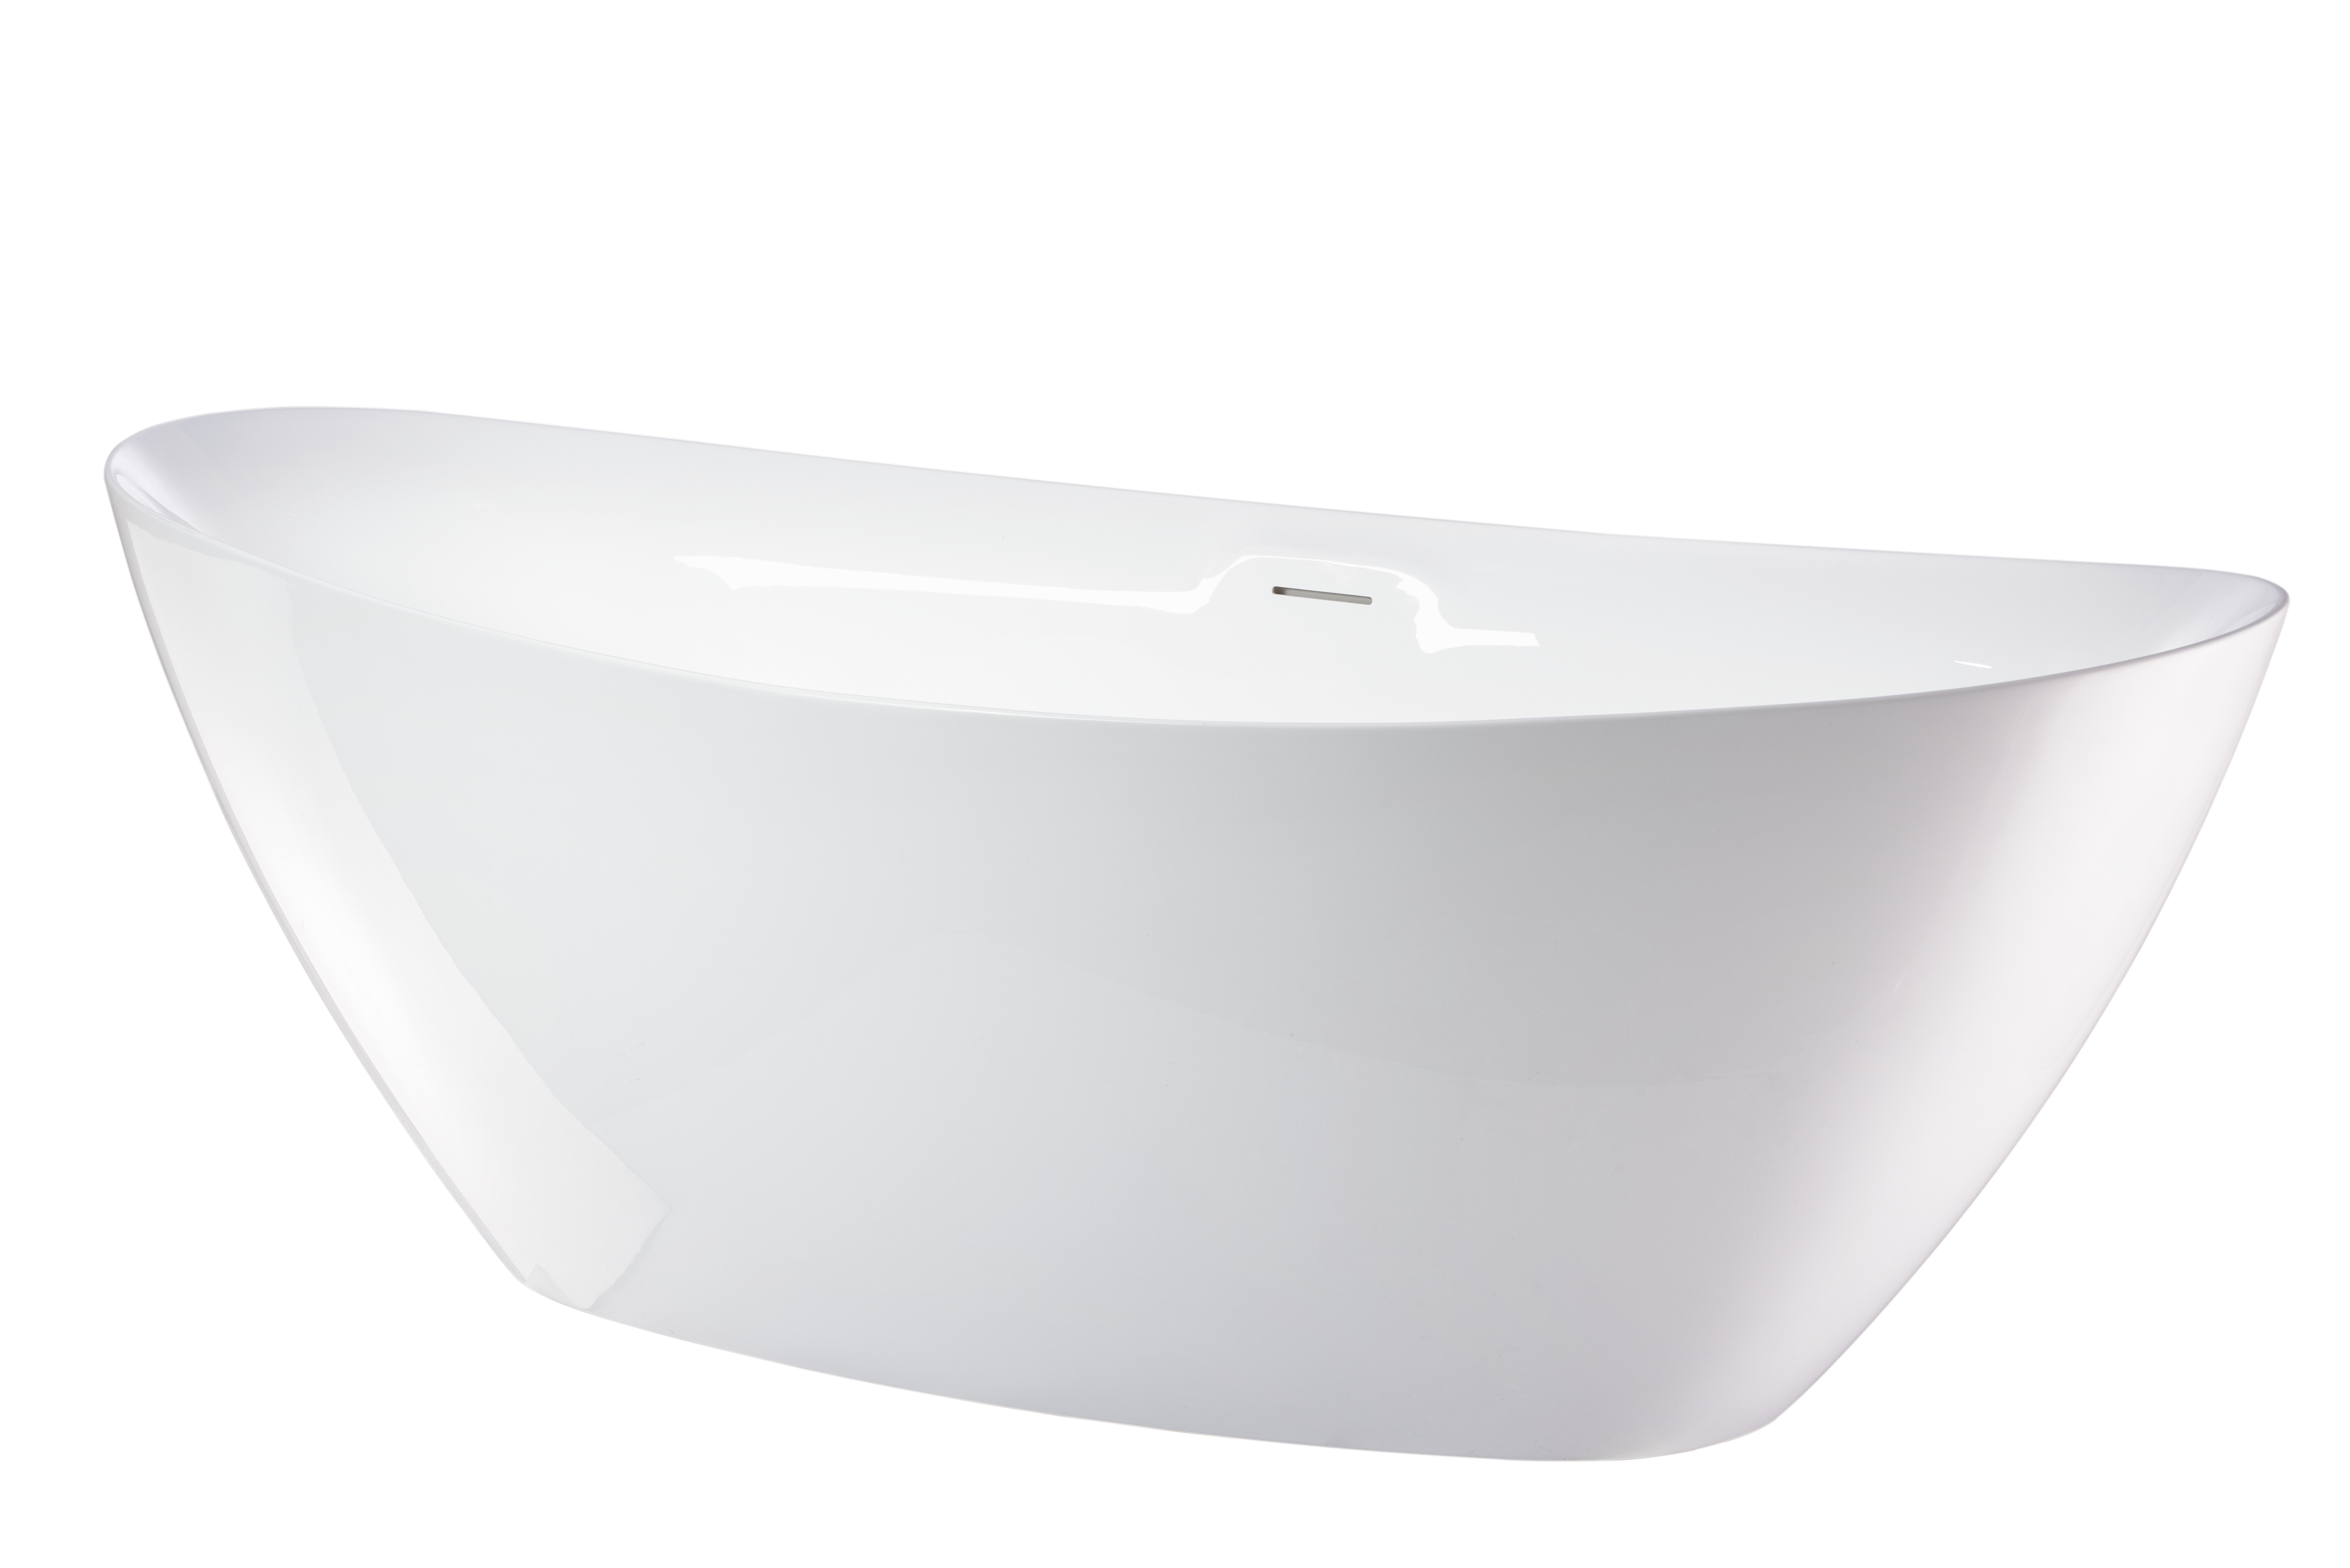 Va6807 Freestanding White Acrylic Bathtub With Polished Chrome Round Overflow & Pop-up Drain - 71 X 34 X 25.6 In.